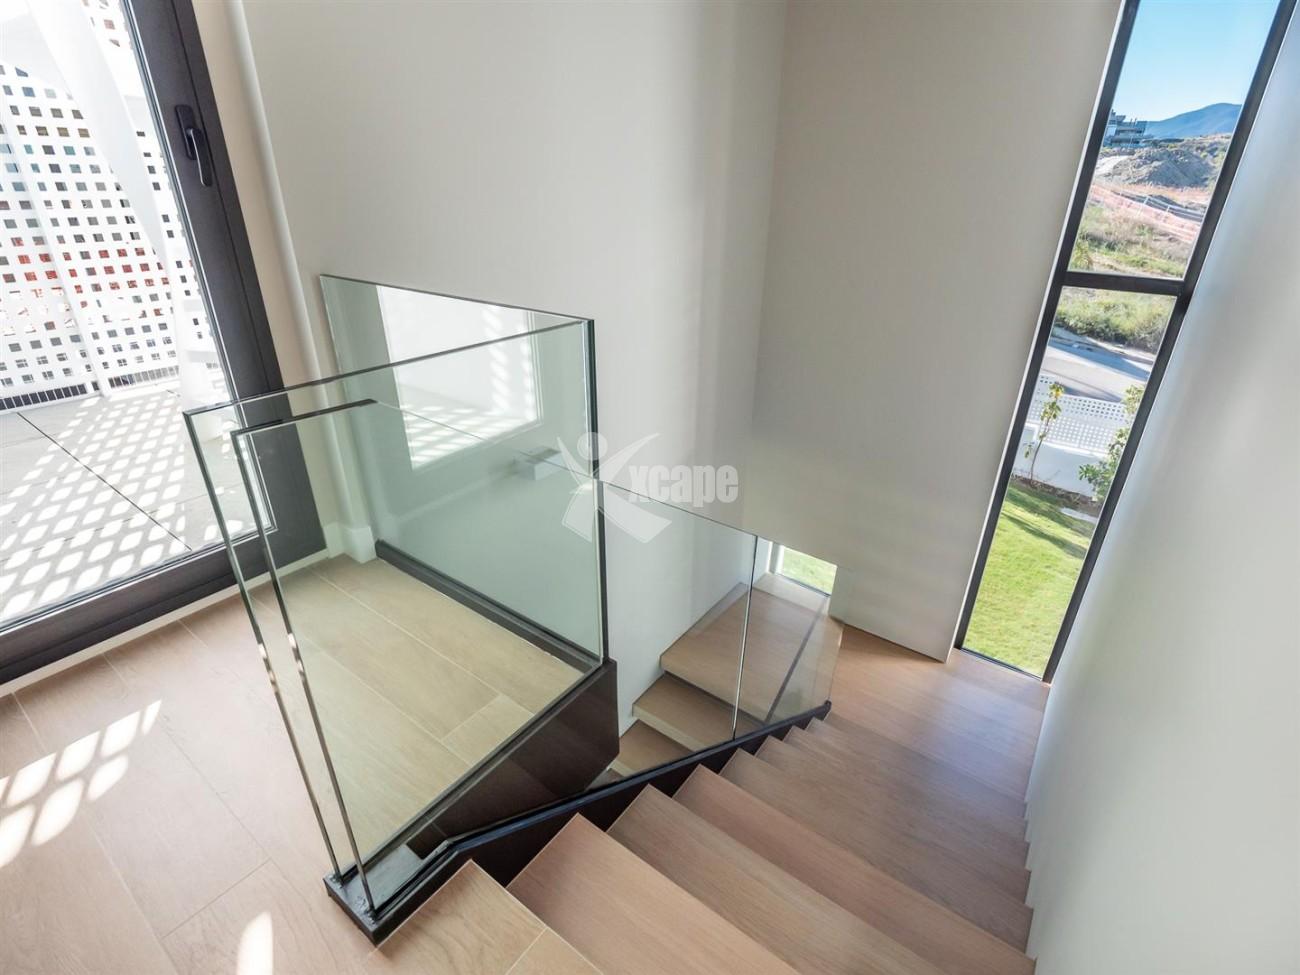 Luxury Contemporary Villa for sale Estepona Spain (58) (Large)